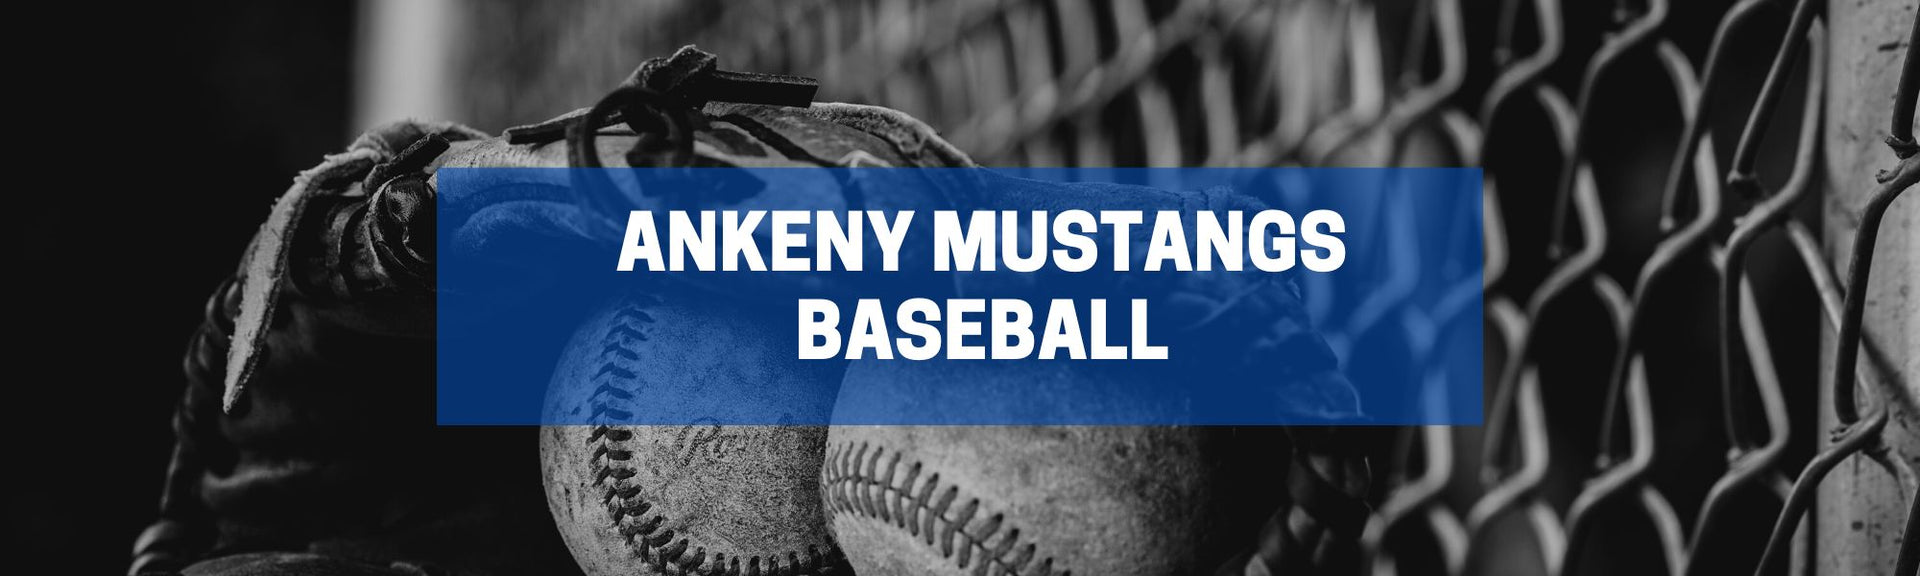 Ankeny Mustangs Baseball